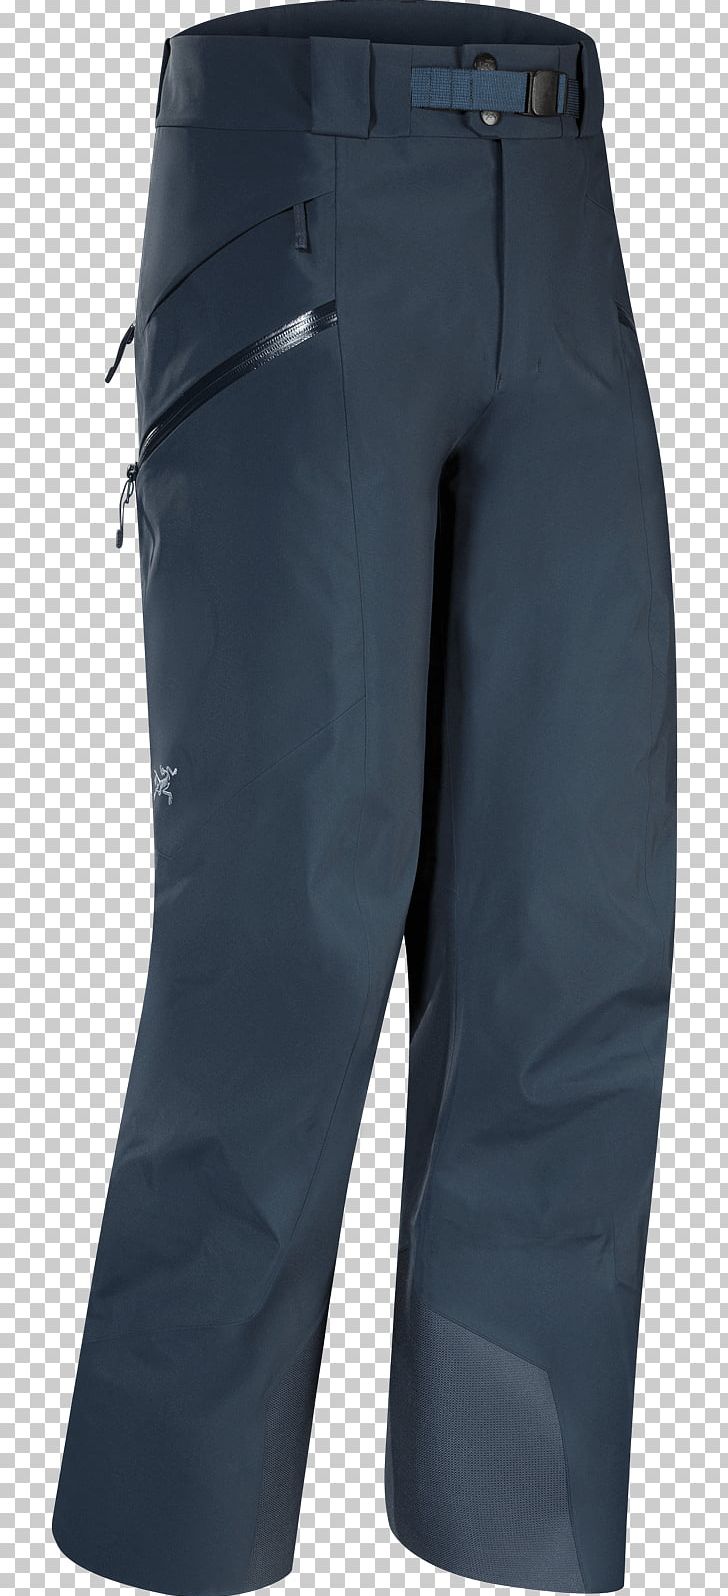 Pants Arc'teryx Carhartt Shorts Raincoat PNG, Clipart,  Free PNG Download